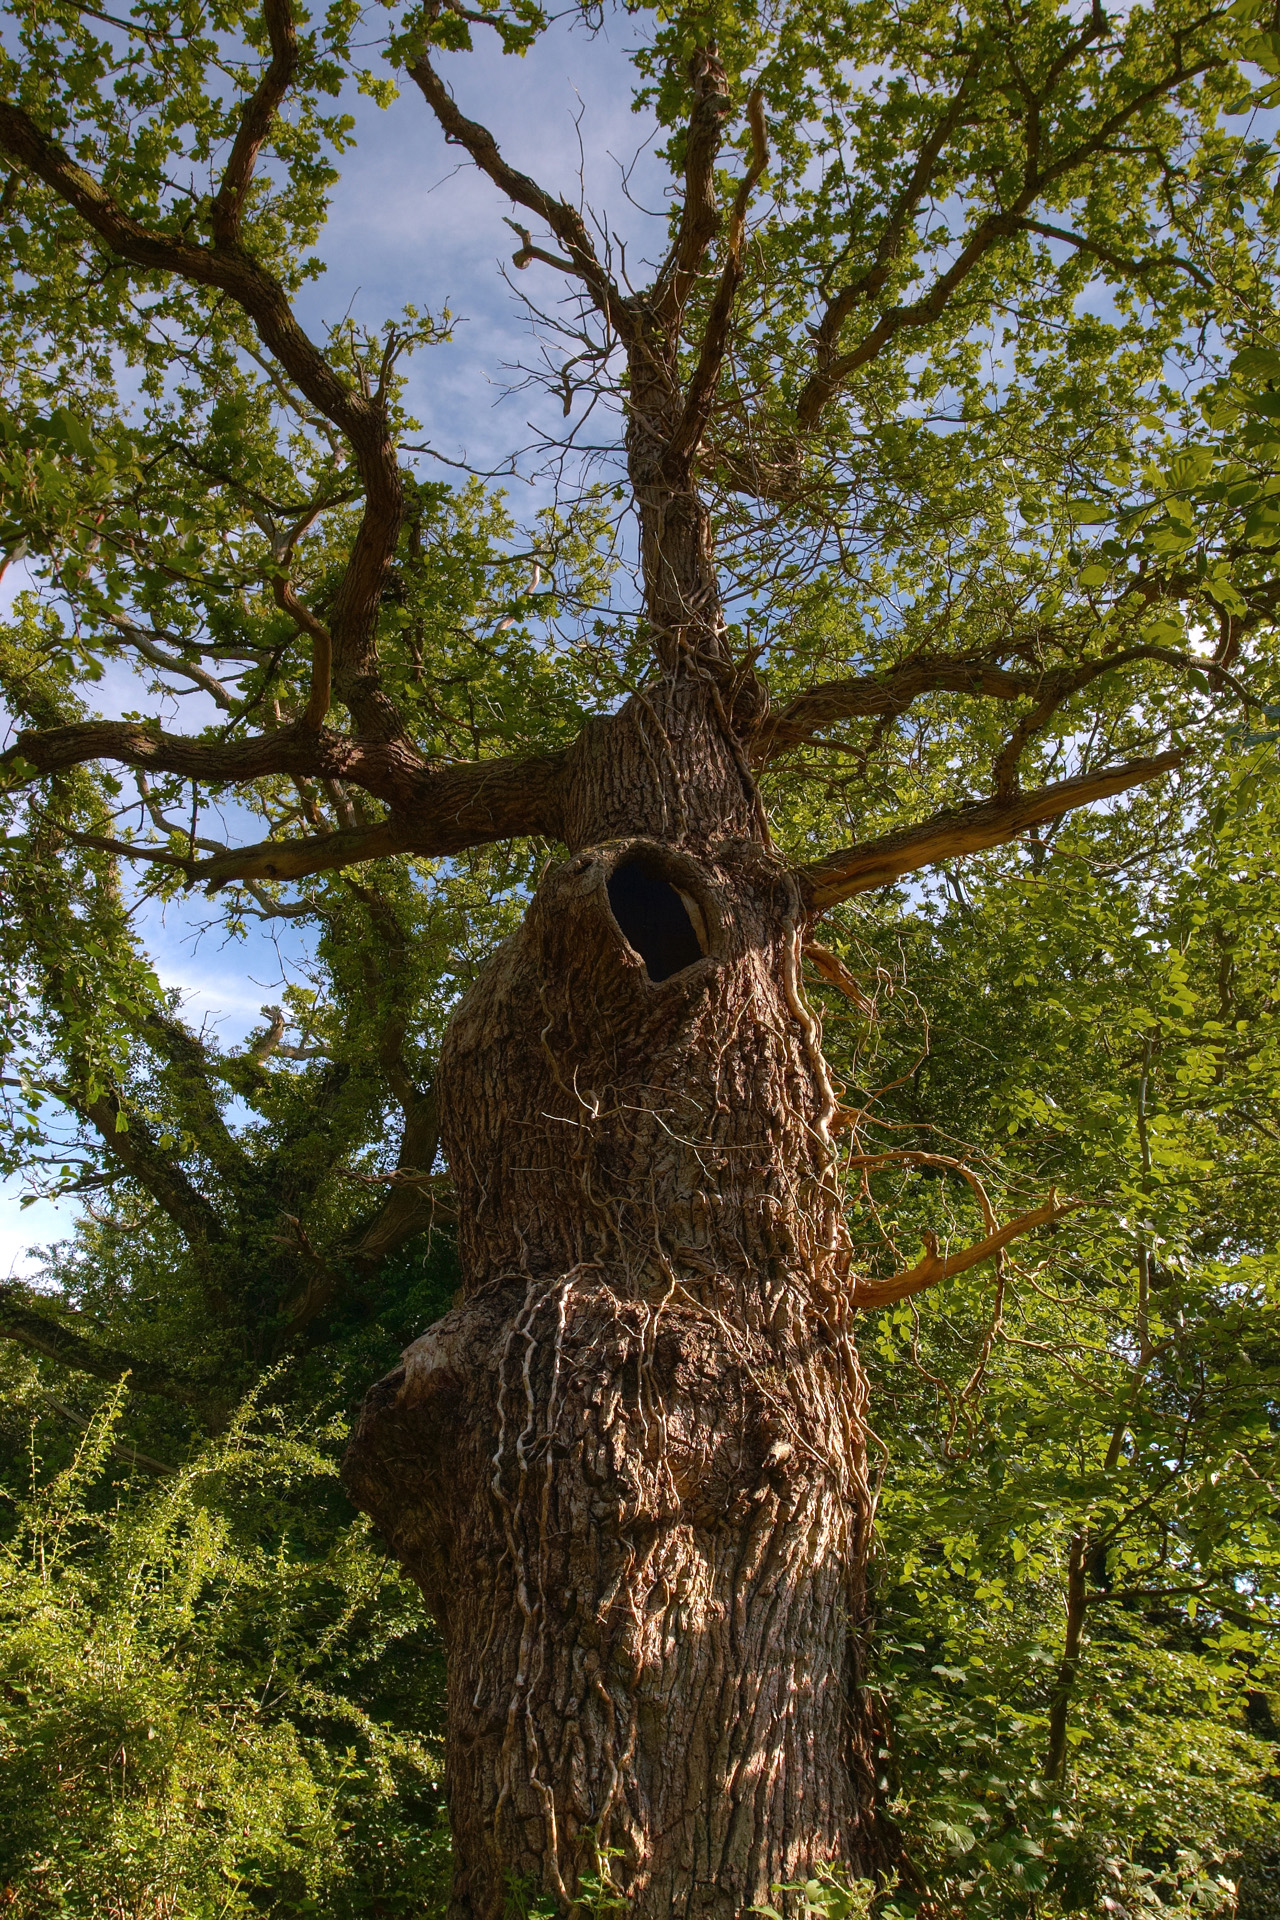 Old Man Burnham, gnarled old Oak tree at Burnham Beeches ancient